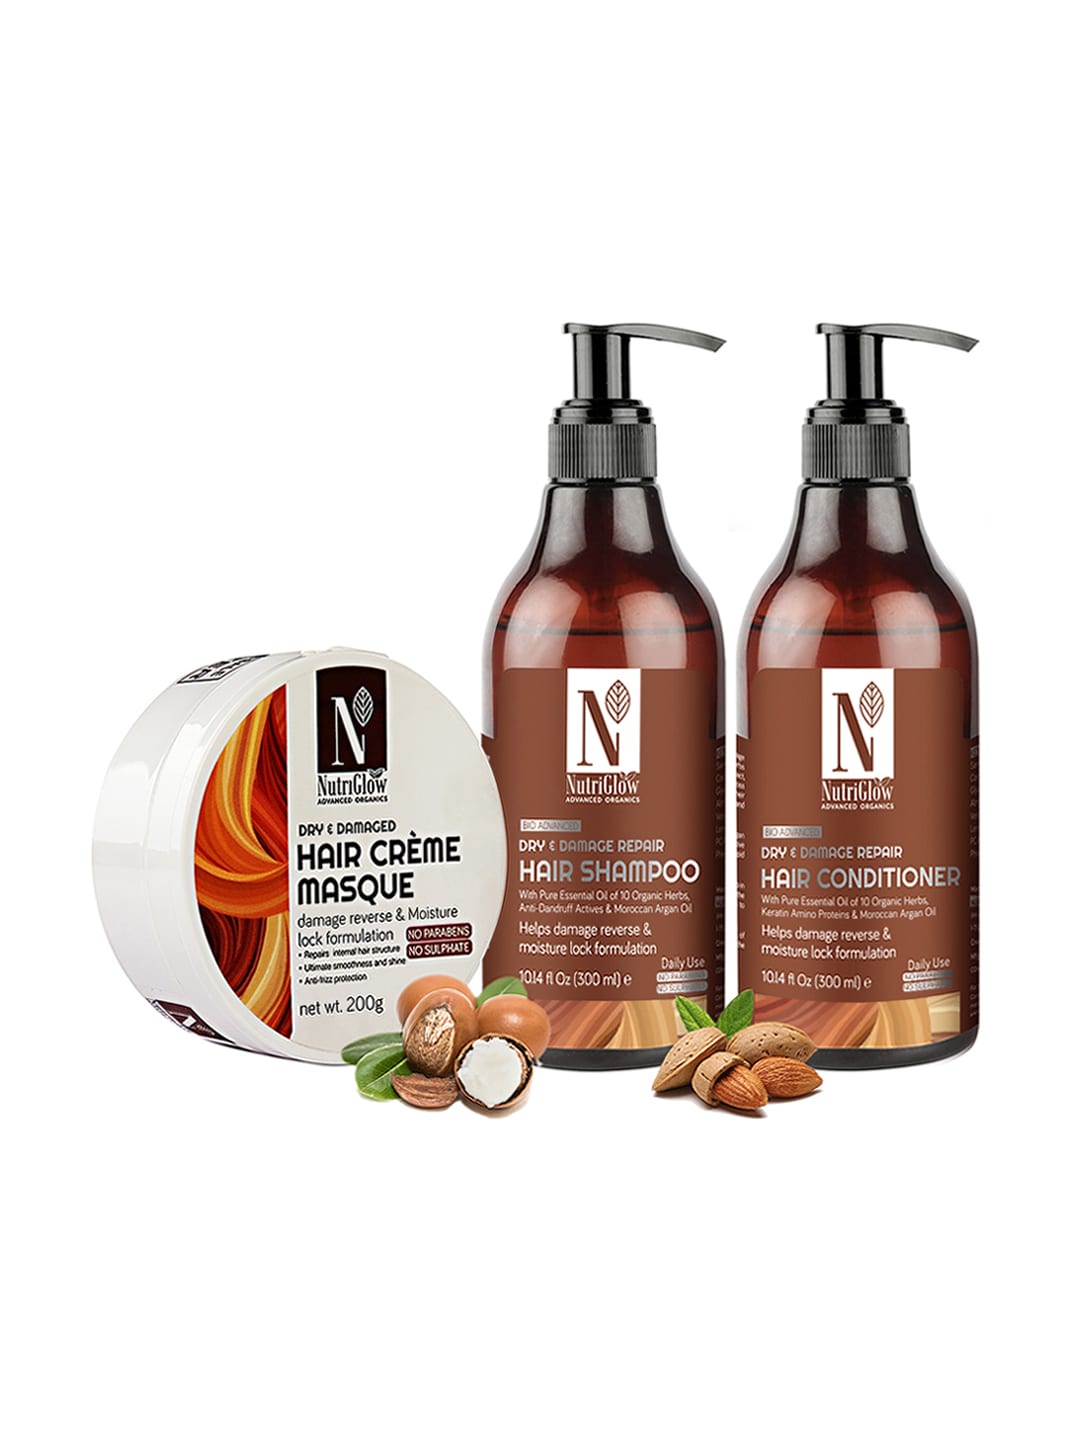 NutriGlow Advanced Organics Dry Damaged Hair Creme Masque, Hair Shampoo & Conditioner Price in India